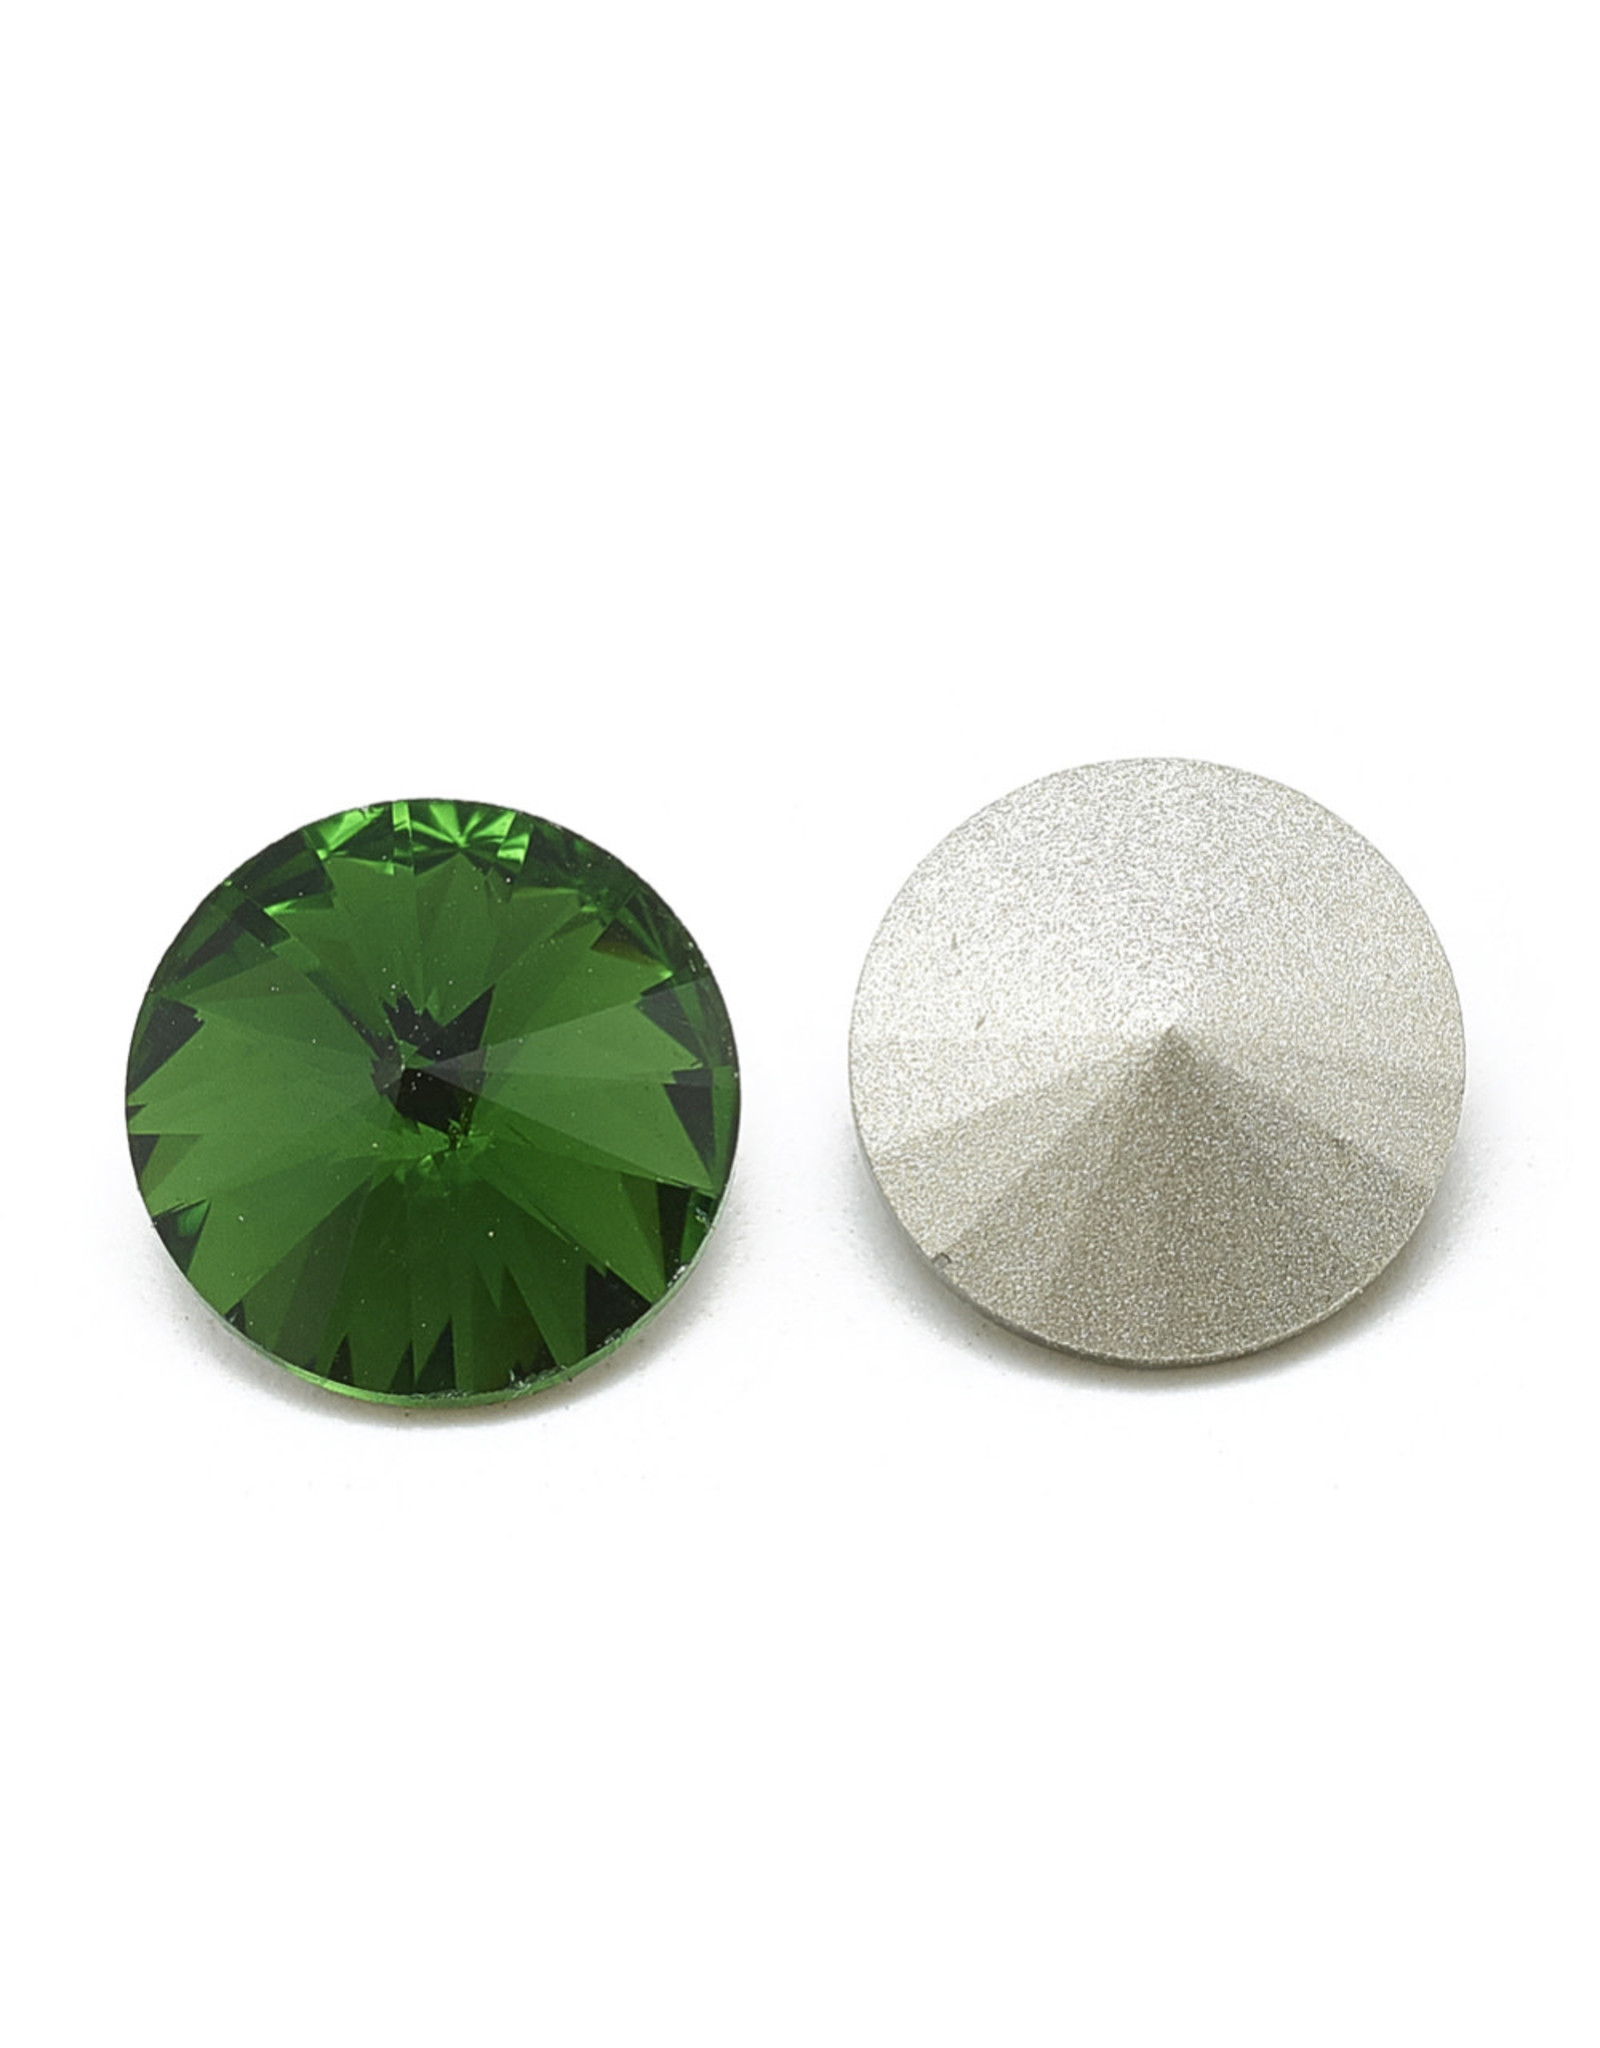 Round Glass Rivoli  14mm Emerald Green x6